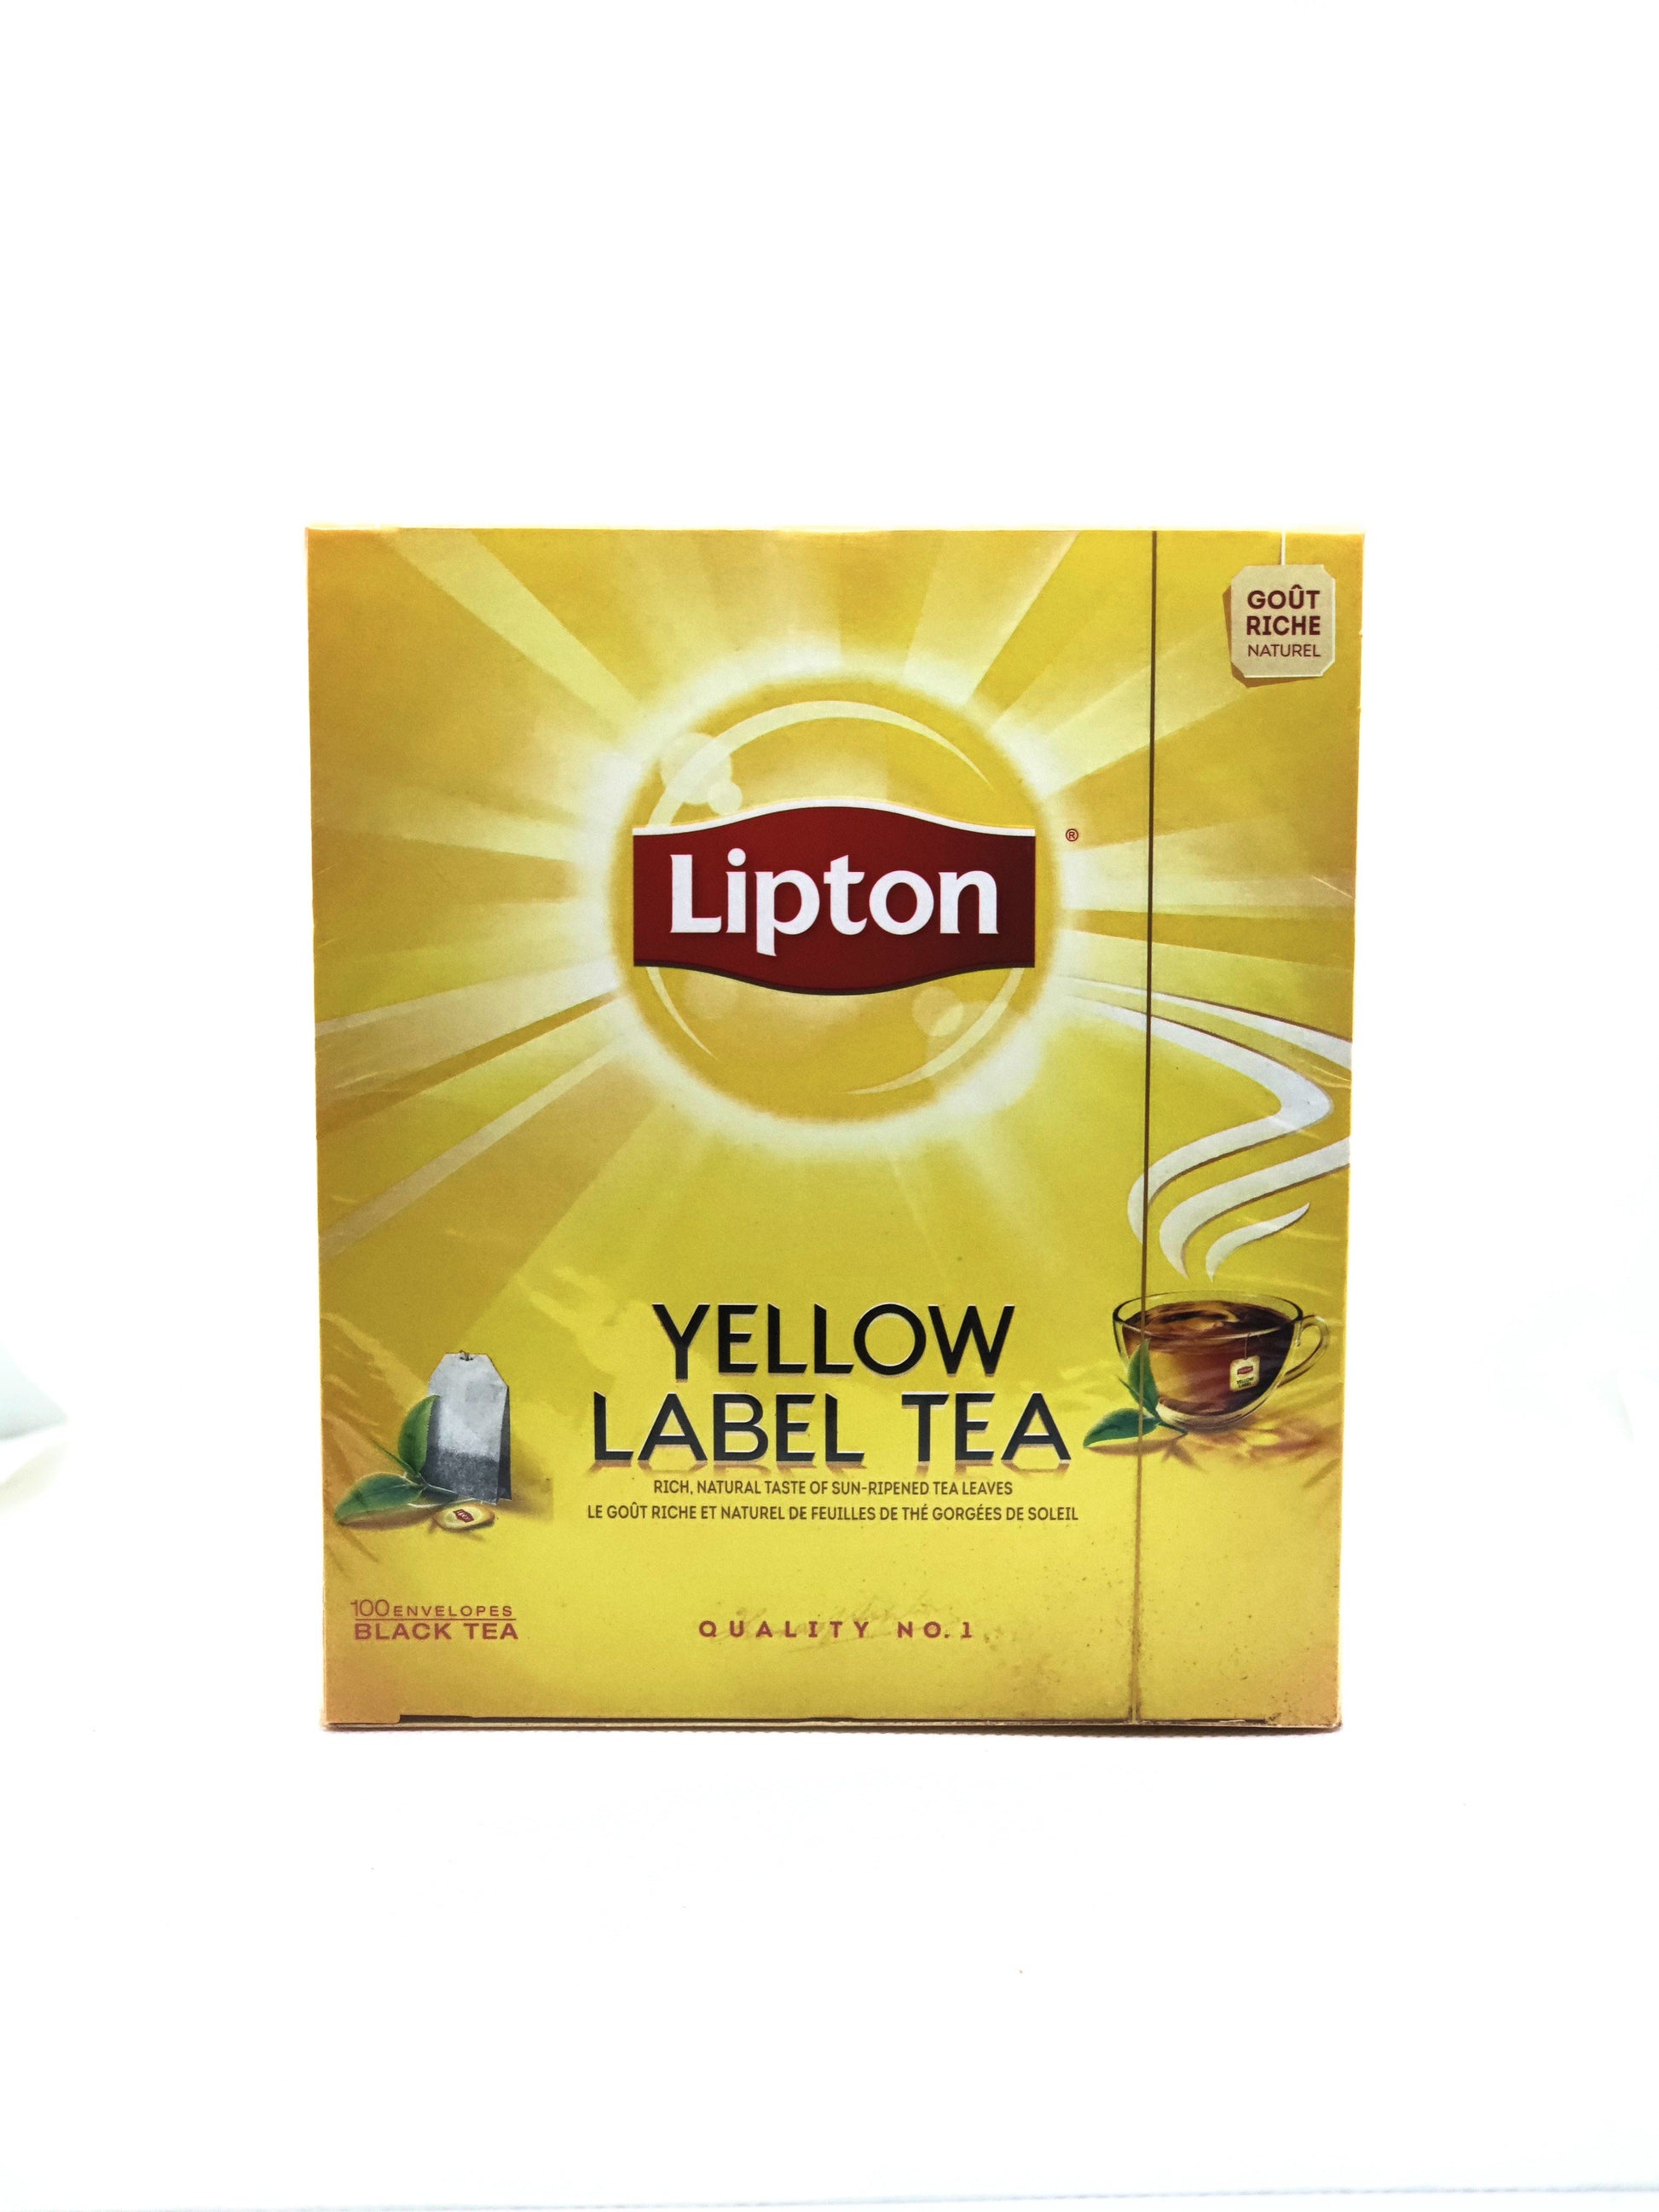 200 gram box of lipton yellow label tea